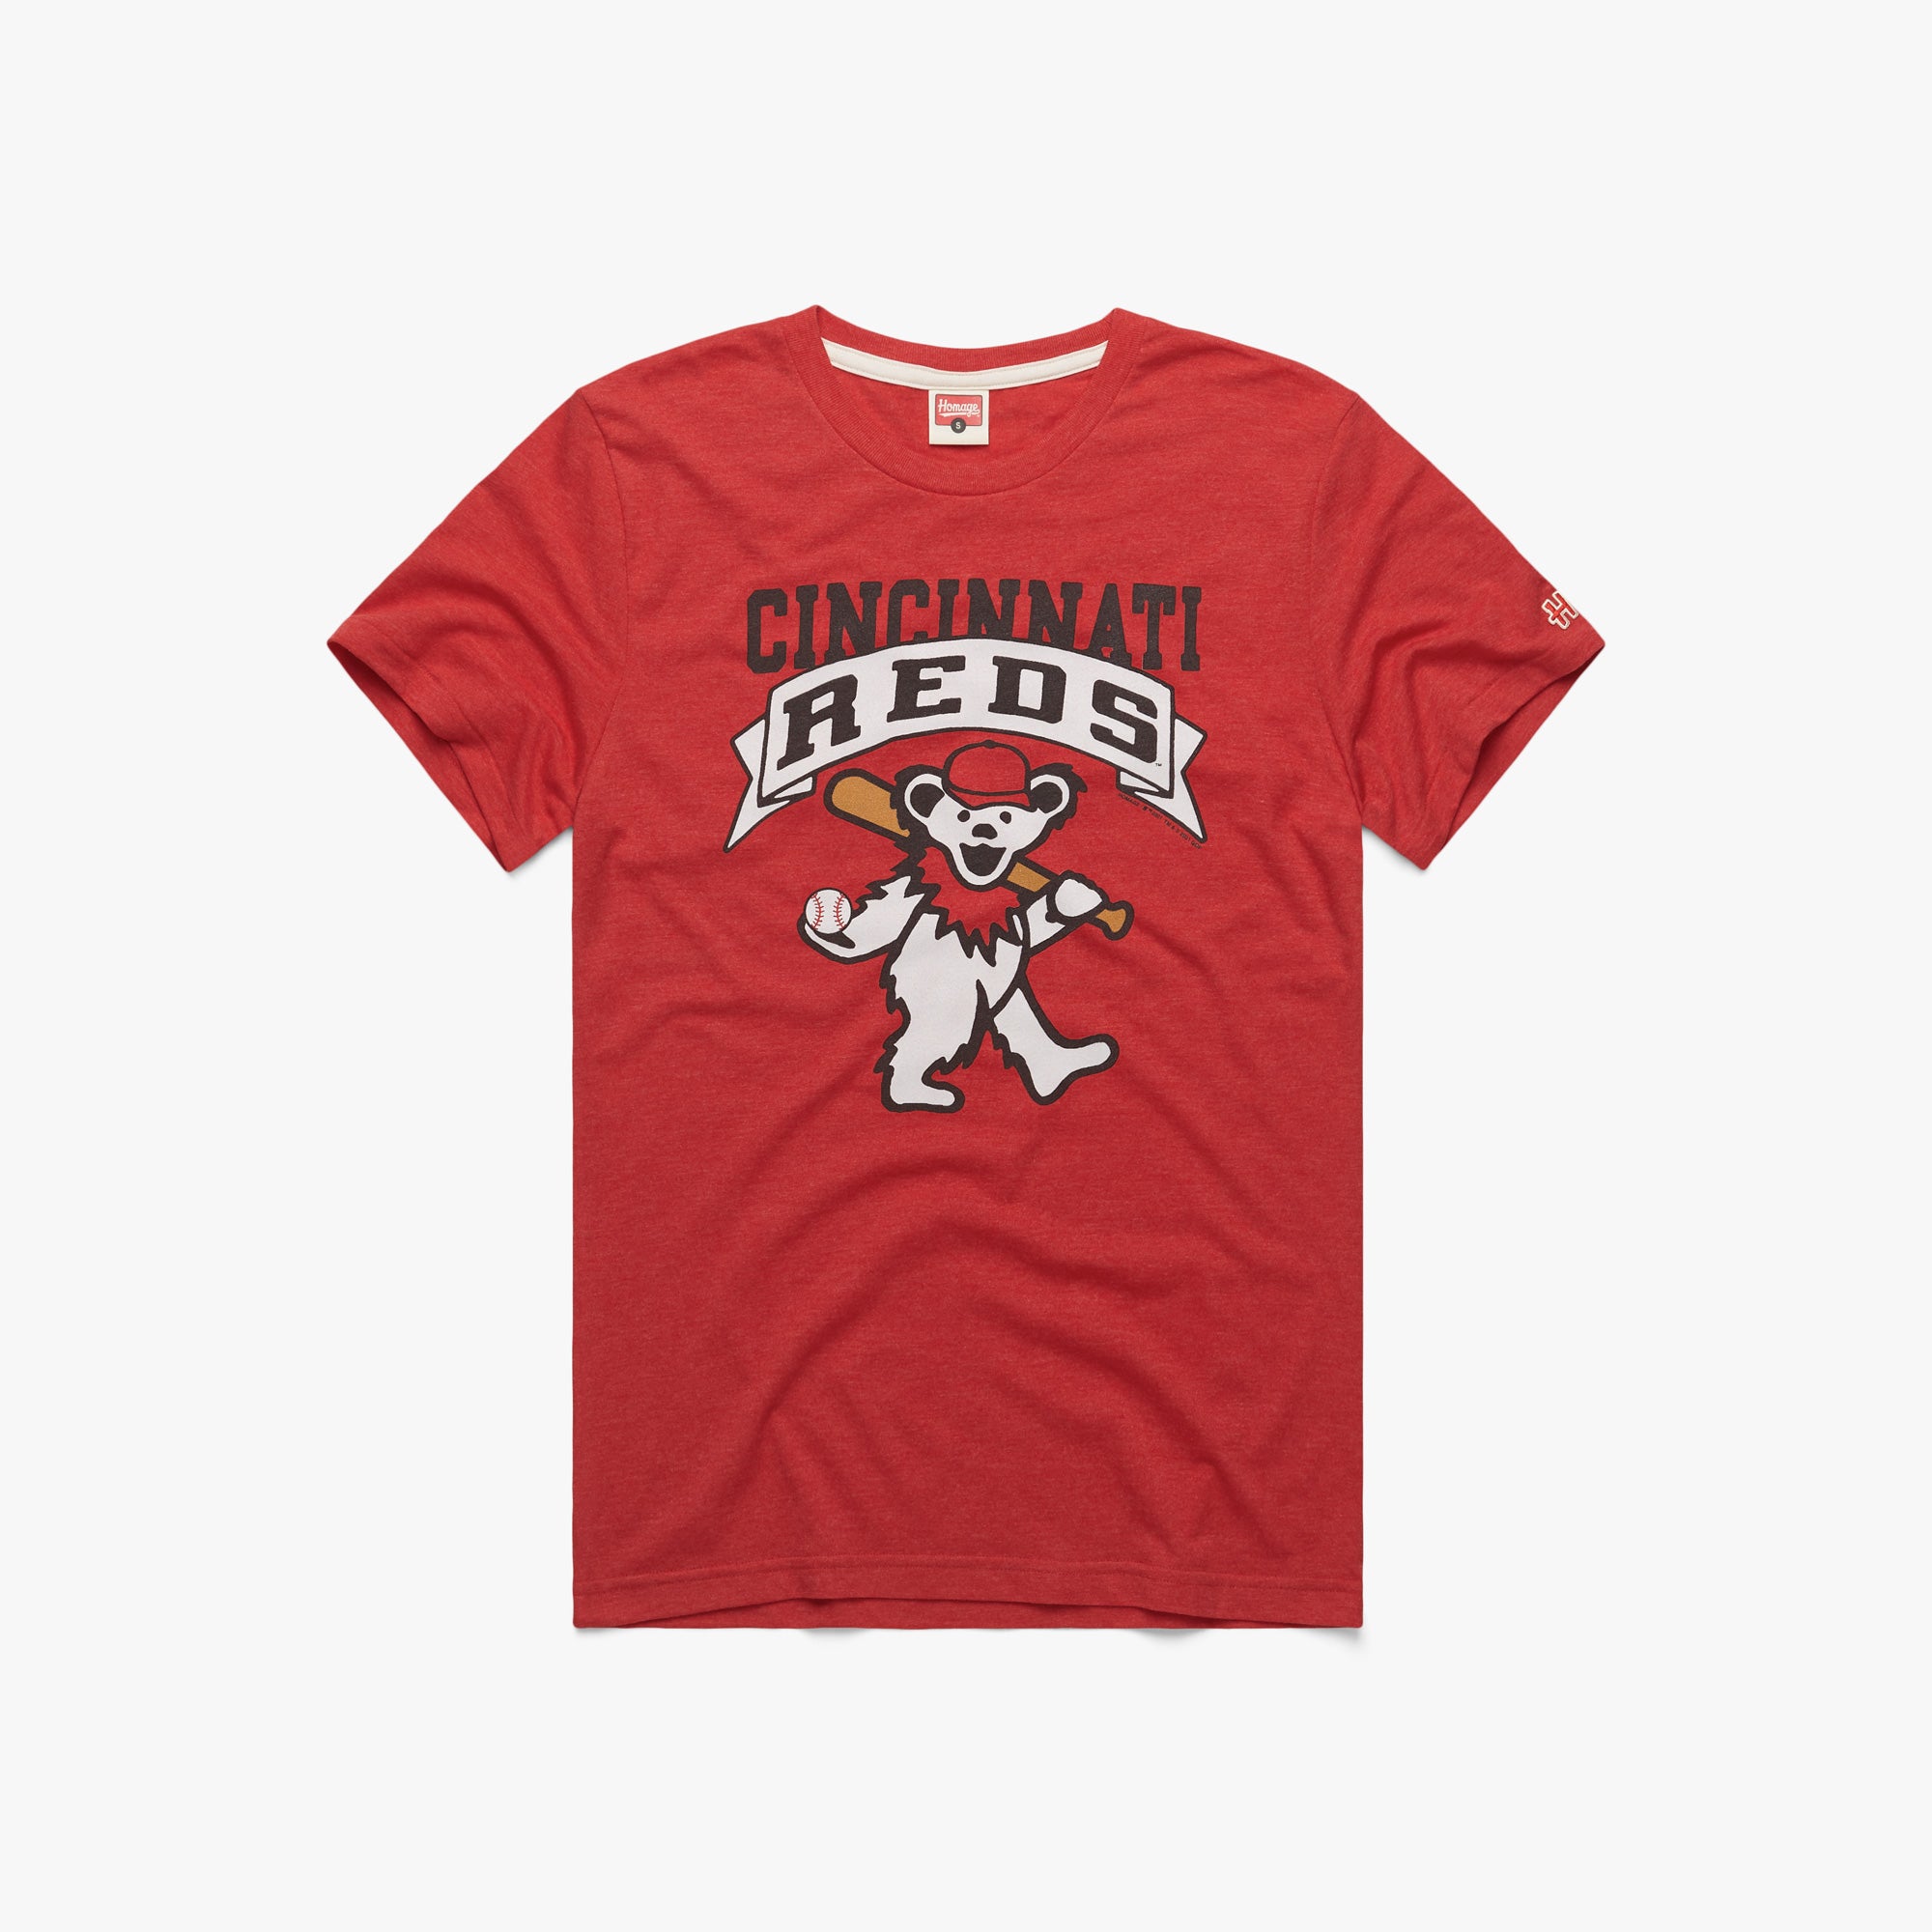 Mr. Dead Red - Grateful Dead Cincy Baseball